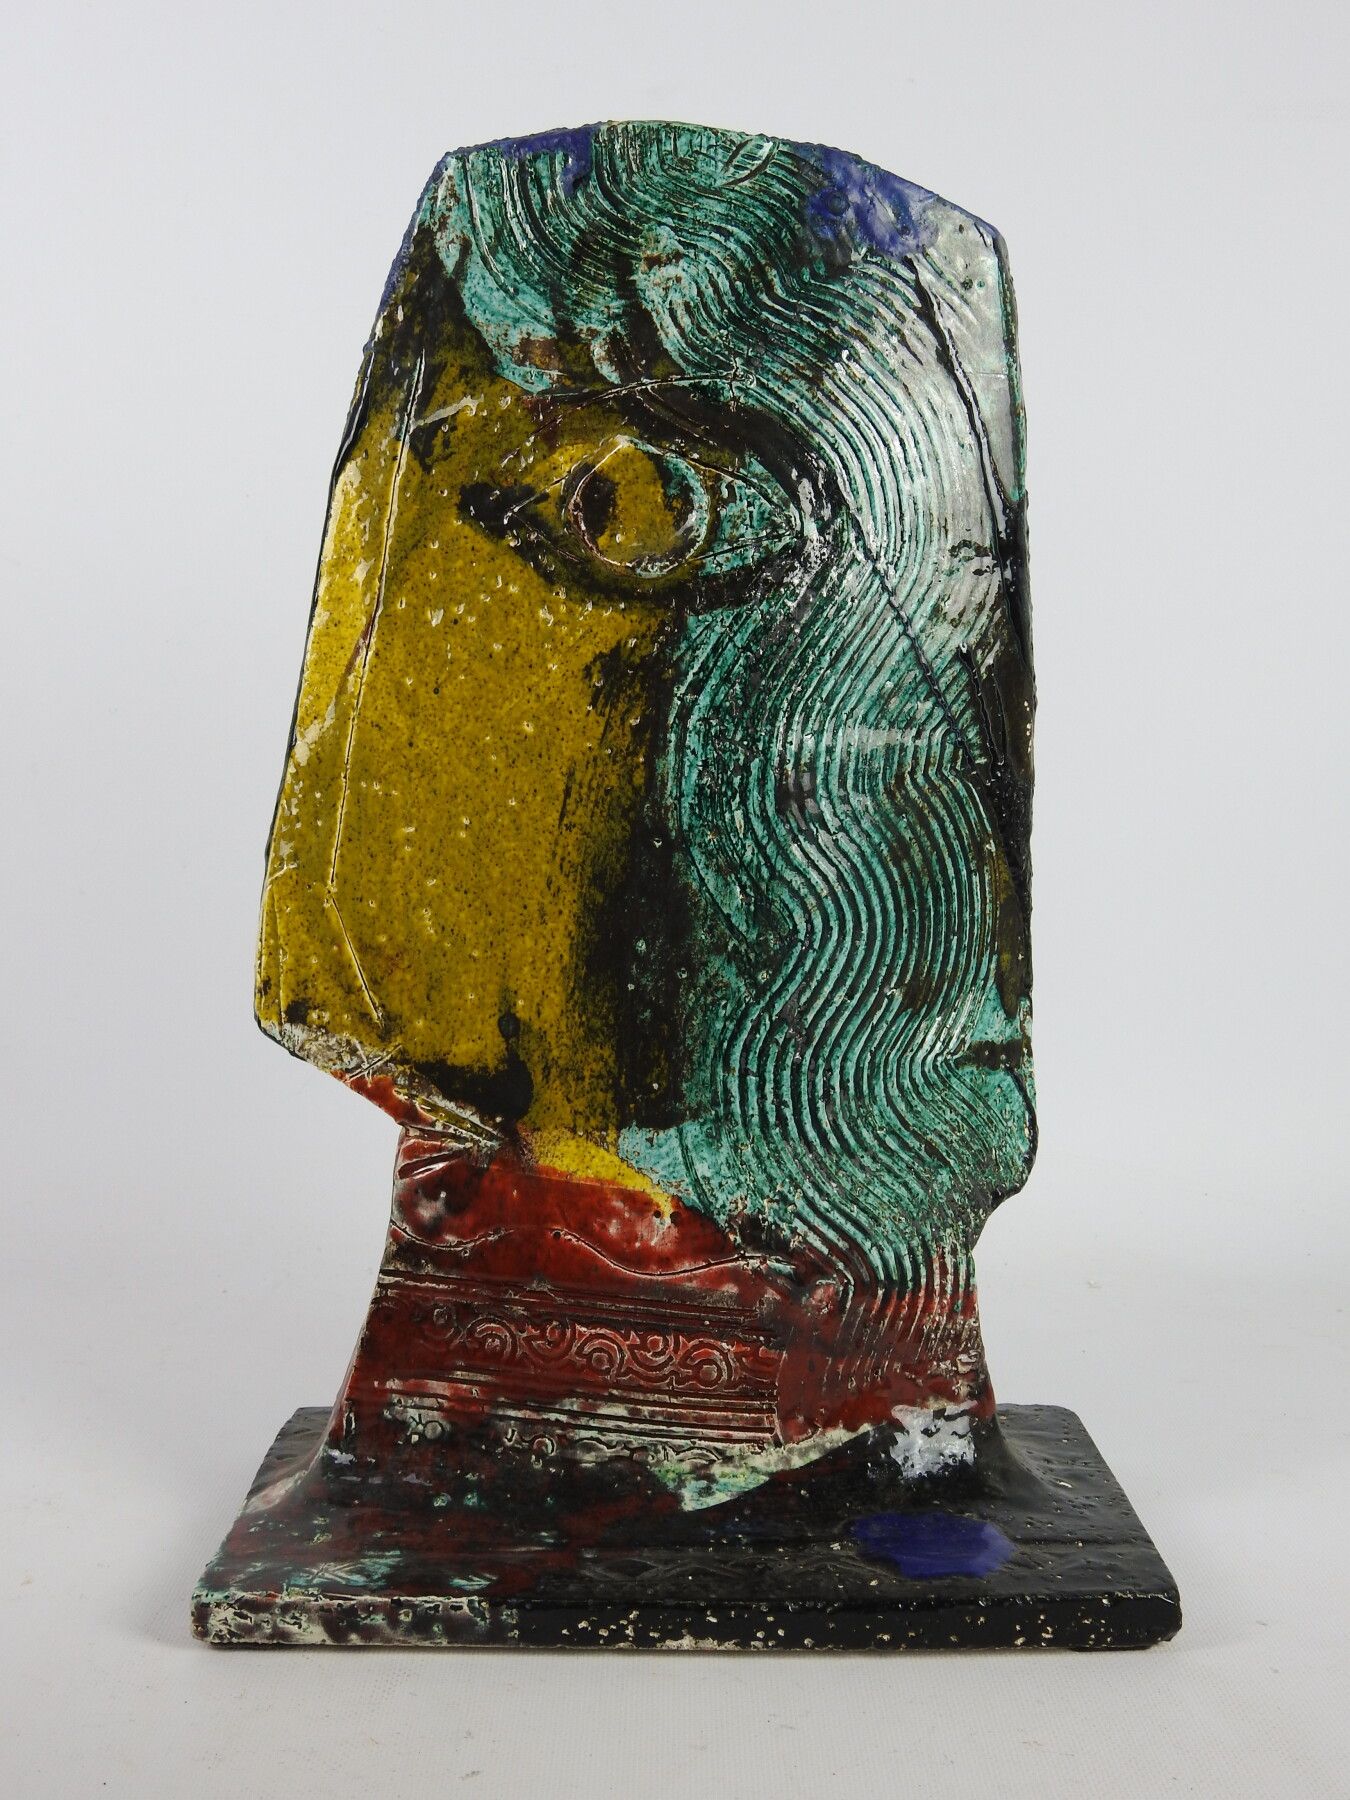 Null 让-保罗-范利特（生于1940年）。 釉面陶瓷雕塑，代表一个黄色、绿色和红色的头部。底座下有签名。高：45厘米

出处：来自布洛瓦的私人收藏